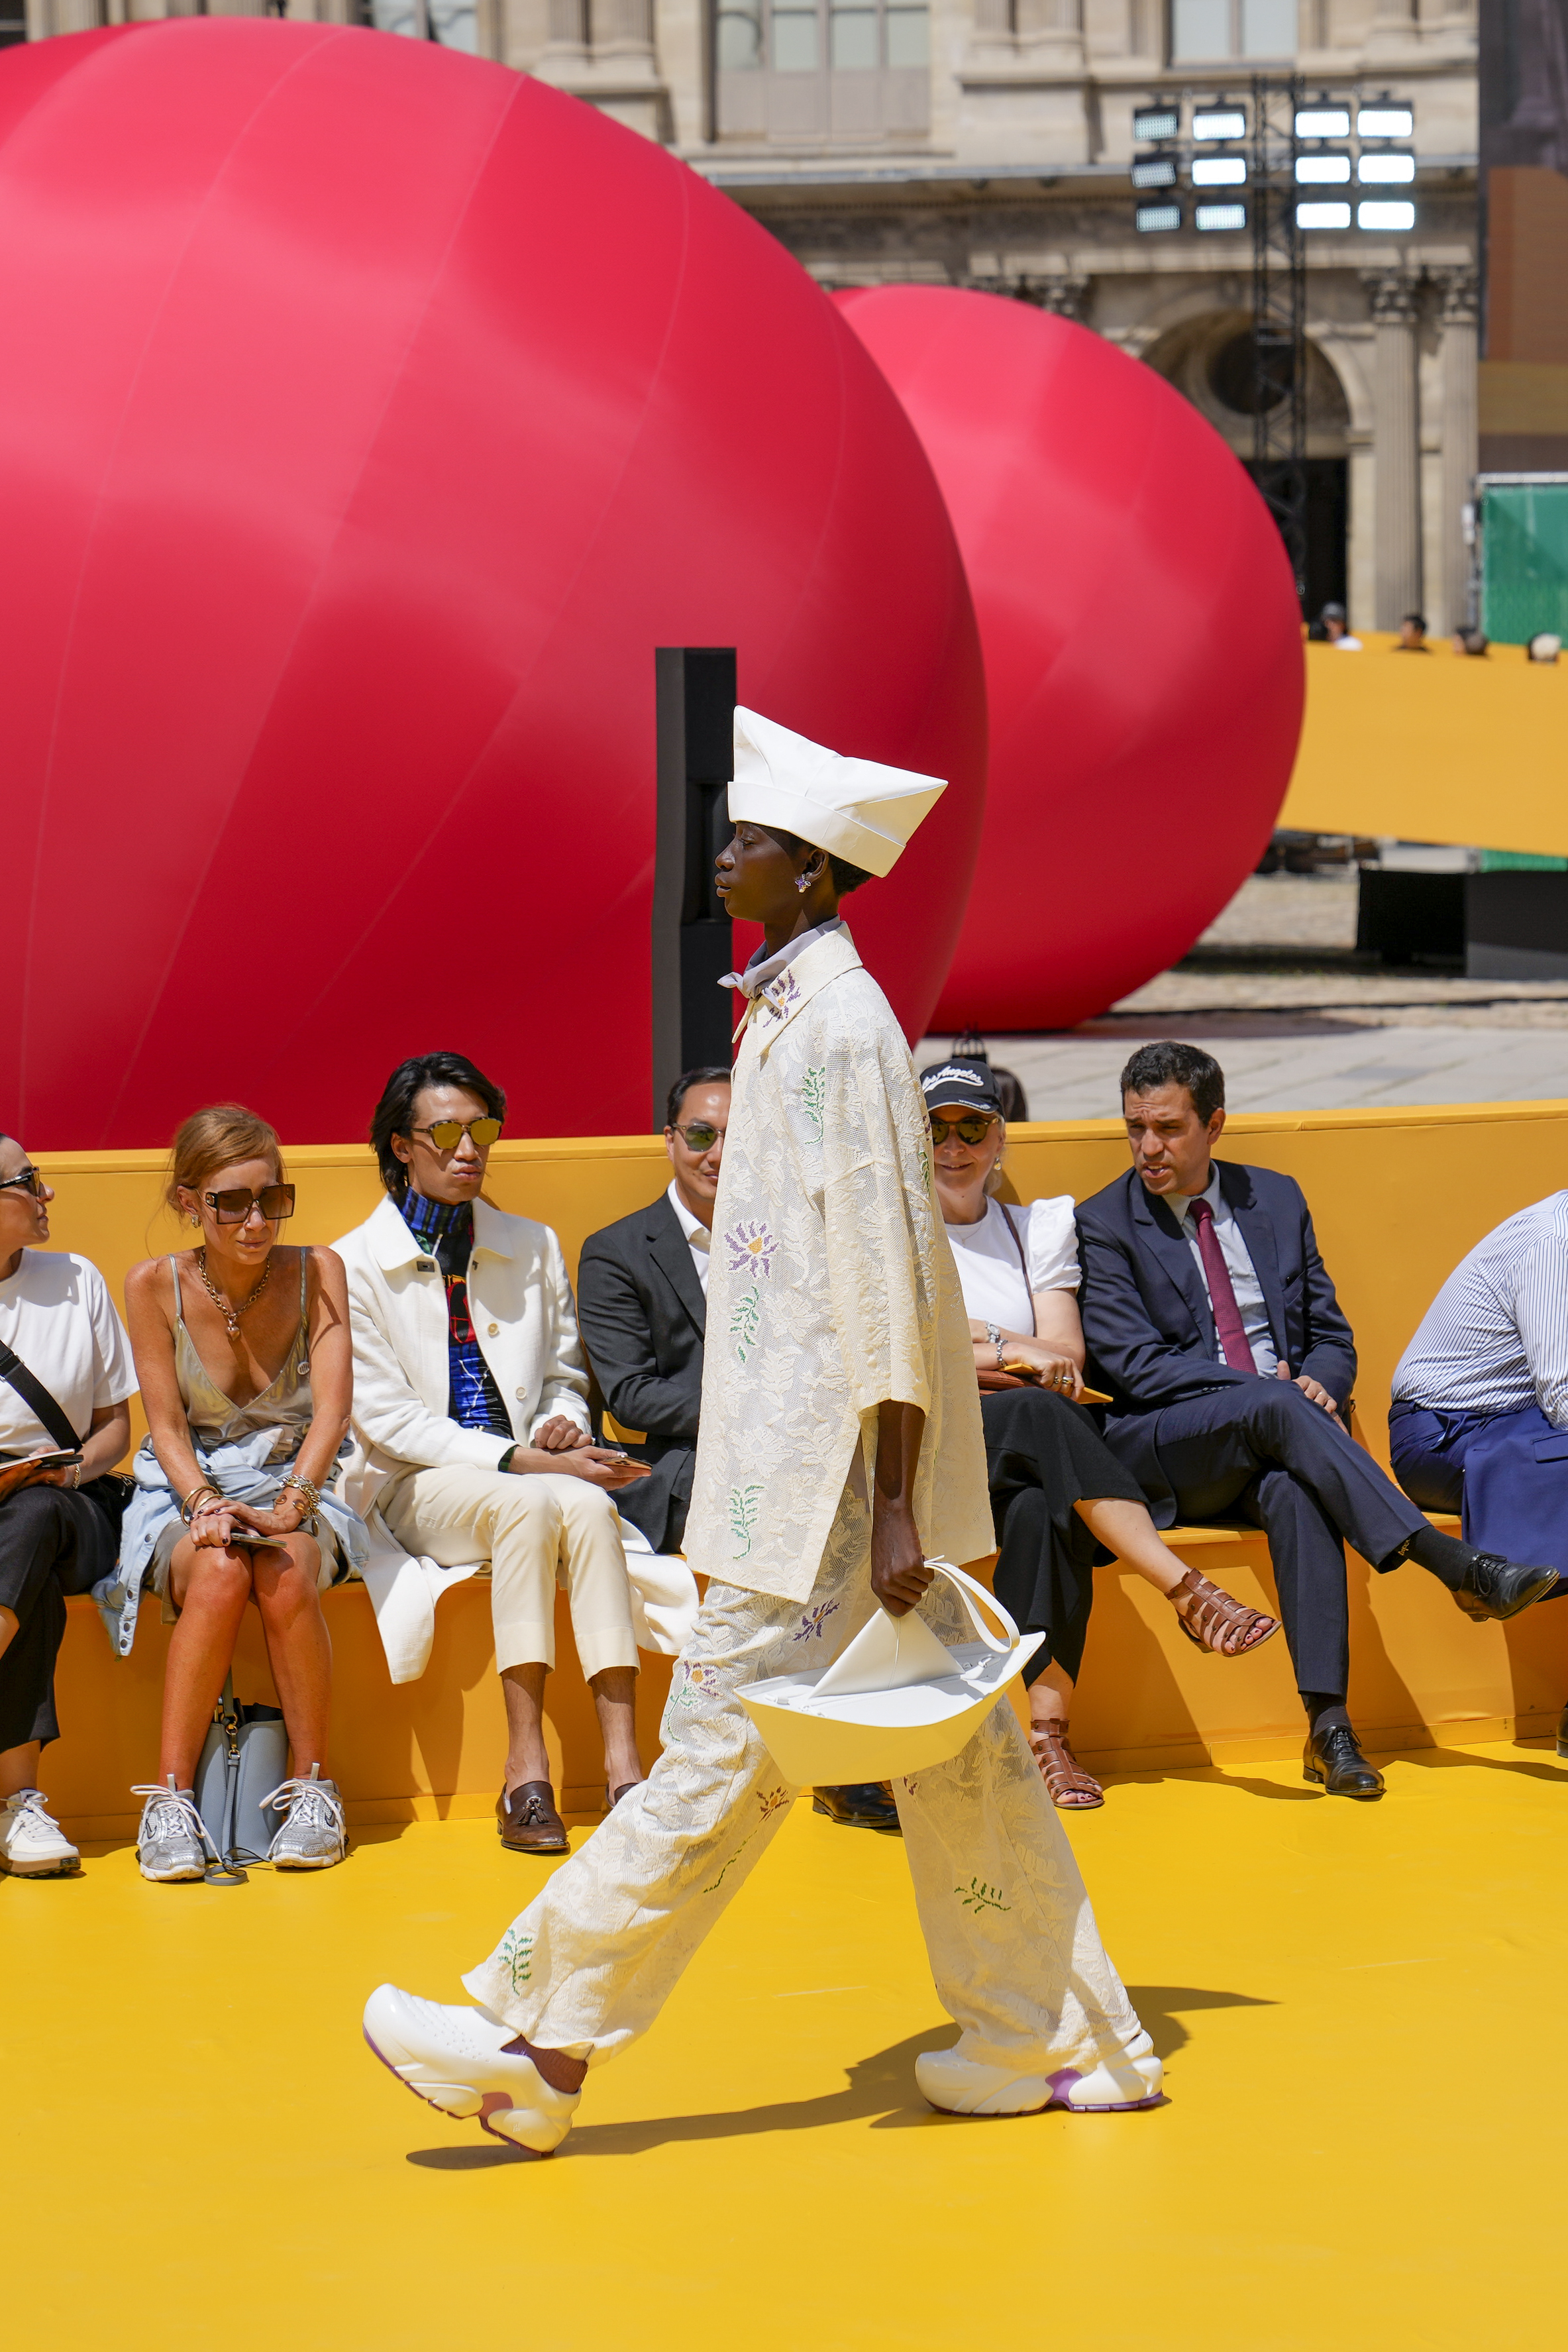 Watch Kendrick Lamar perform at Louis Vuitton's Fashion Week showcase